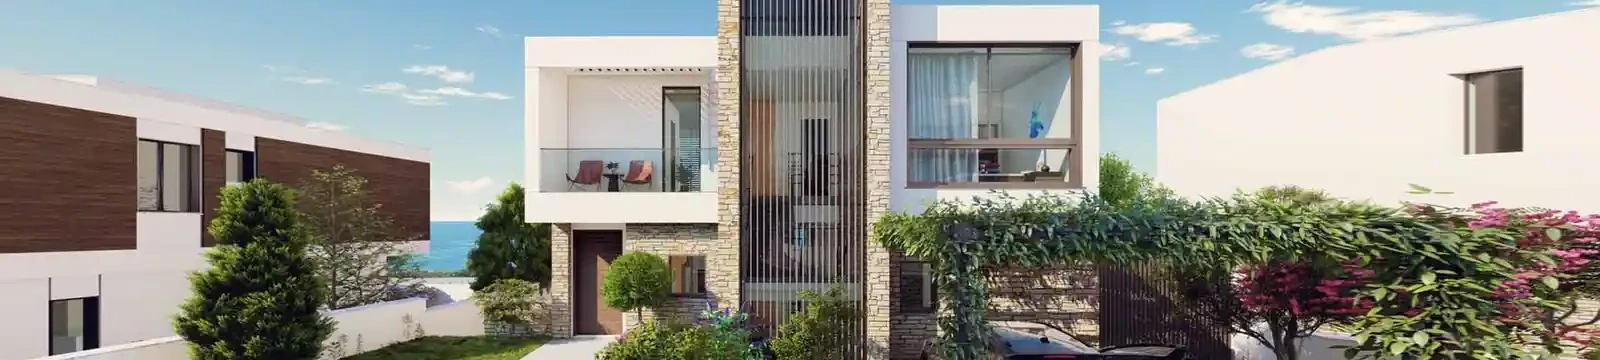 6-bedroom villa fоr sаle €3.650.000, image 1